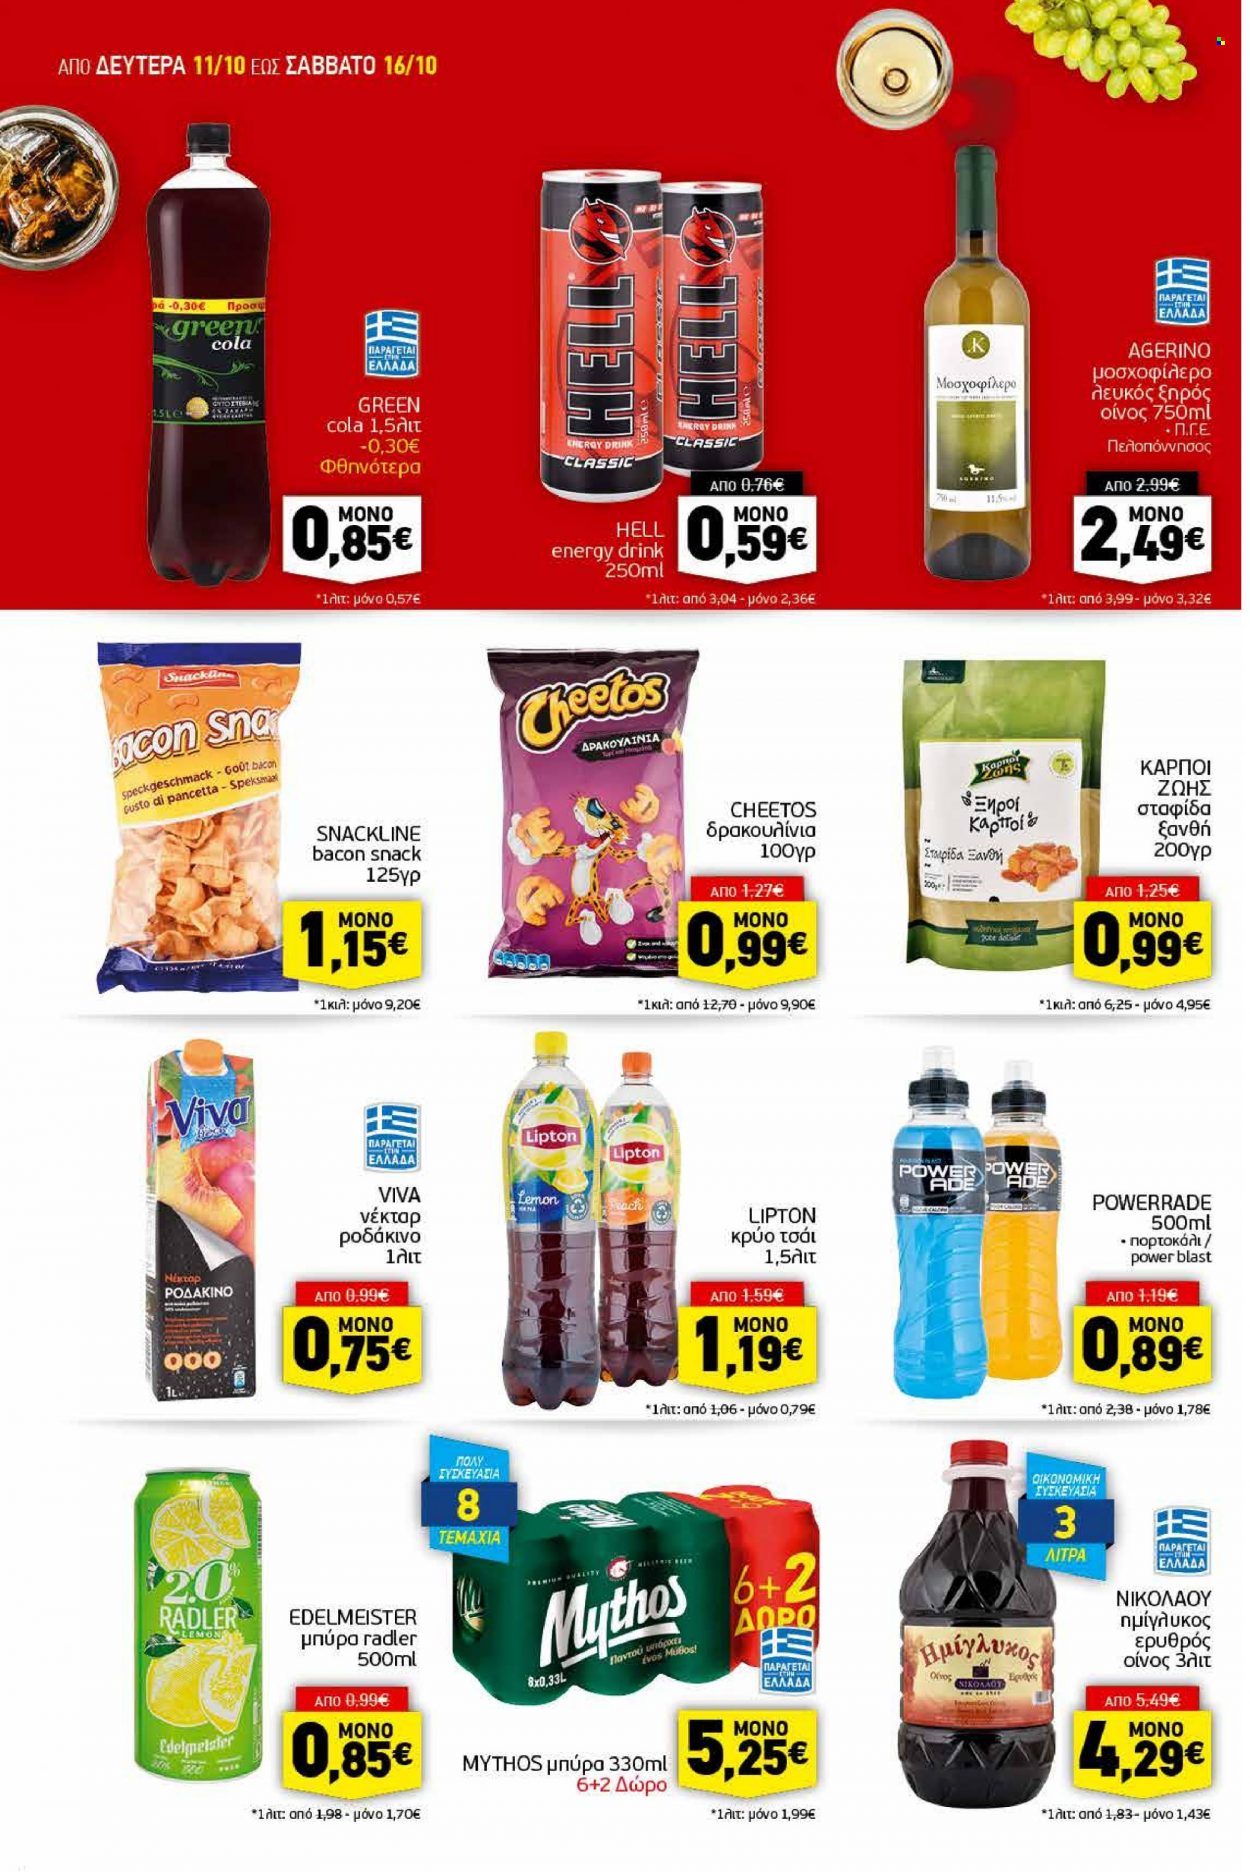 thumbnail - Φυλλάδια Discount Markt - 11.10.2021 - 16.10.2021 - Εκπτωτικά προϊόντα - pancetta, green cola, τσάι, μπύρα. Σελίδα 10.